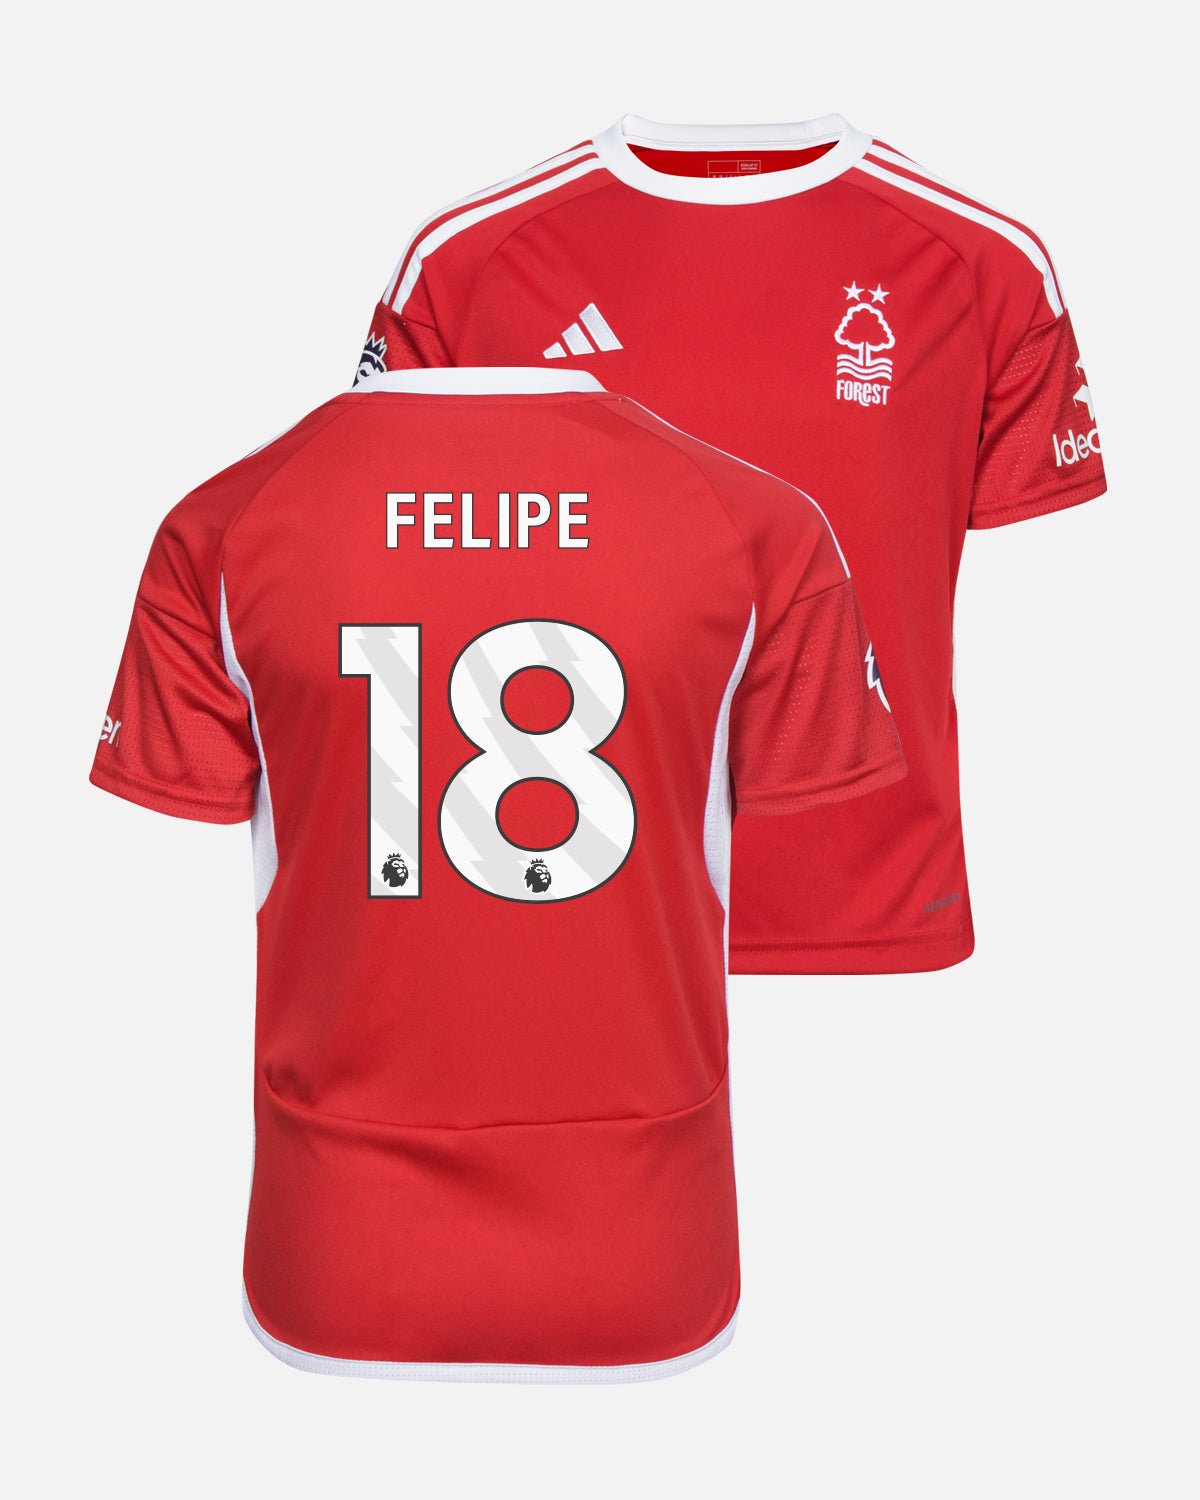 NFFC Junior Home Shirt 23-24 - Felipe 18 - Nottingham Forest FC